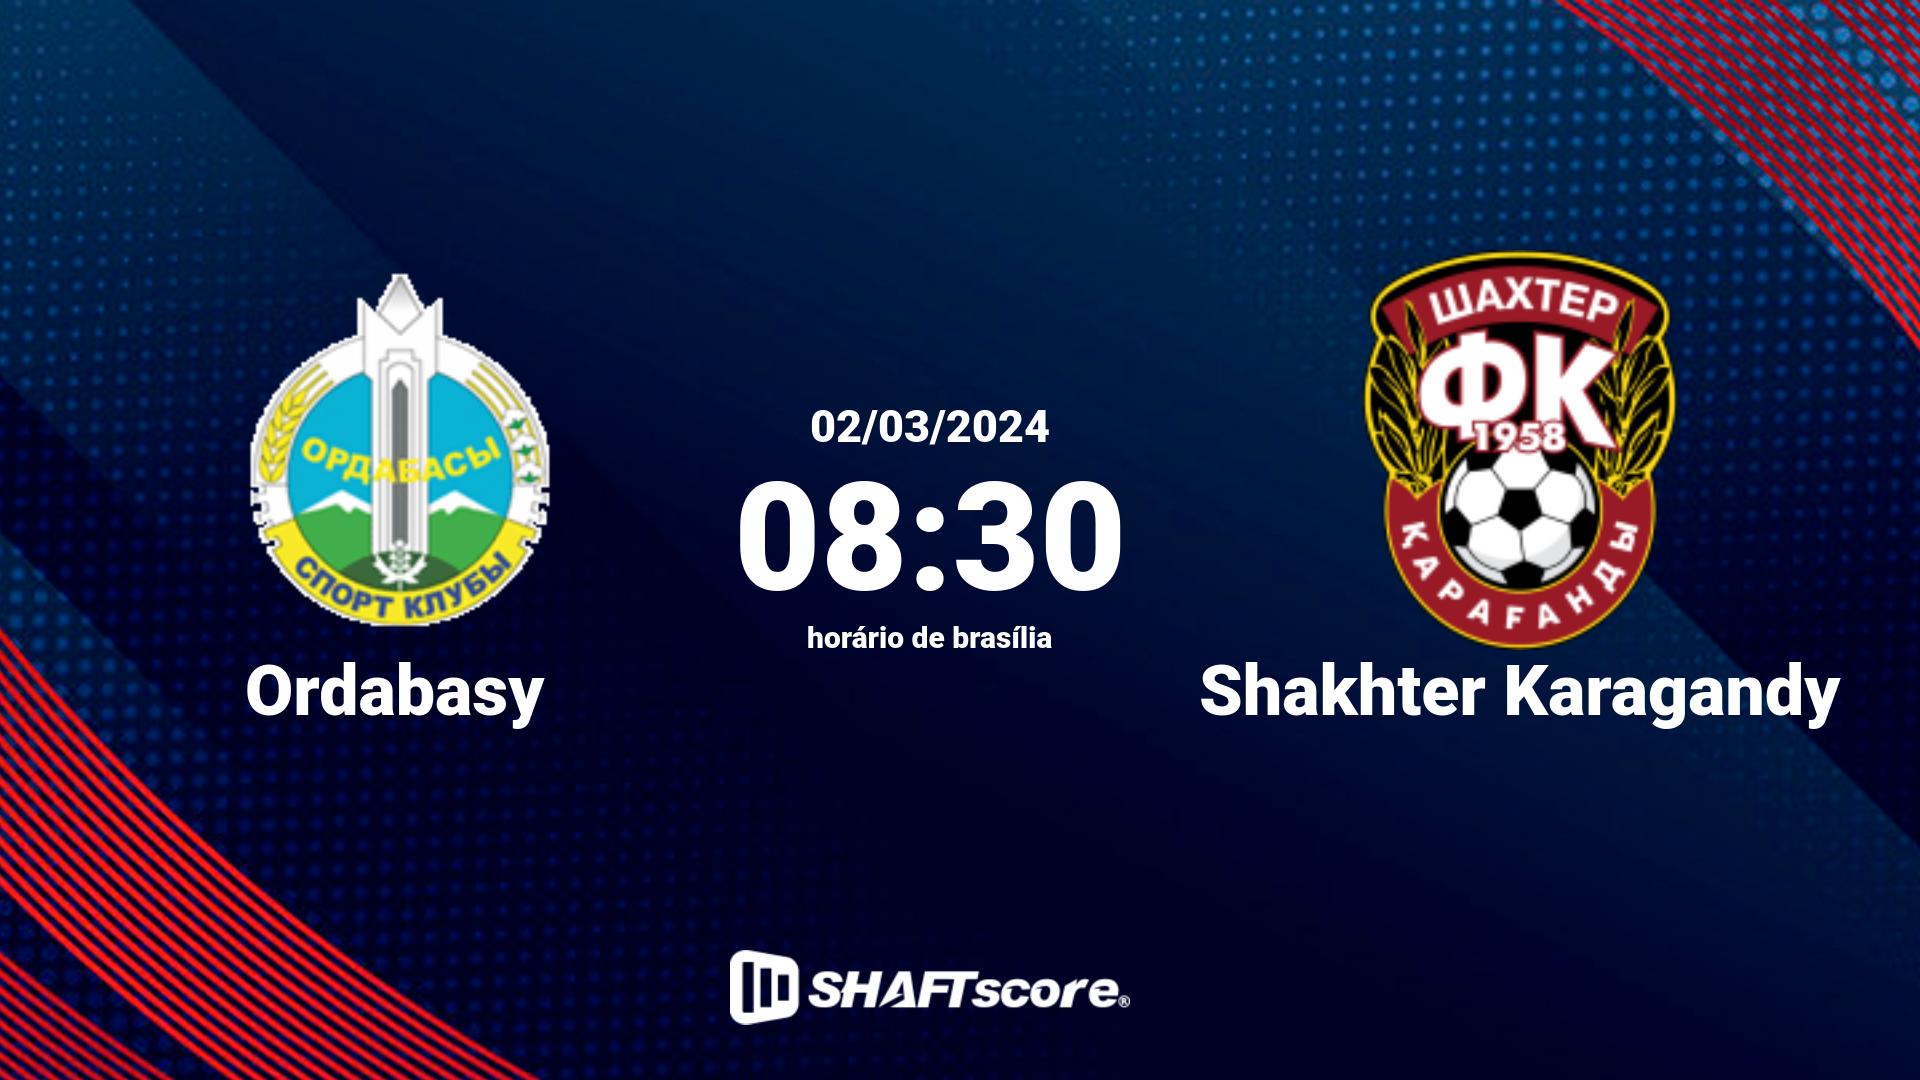 Estatísticas do jogo Ordabasy vs Shakhter Karagandy 02.03 08:30